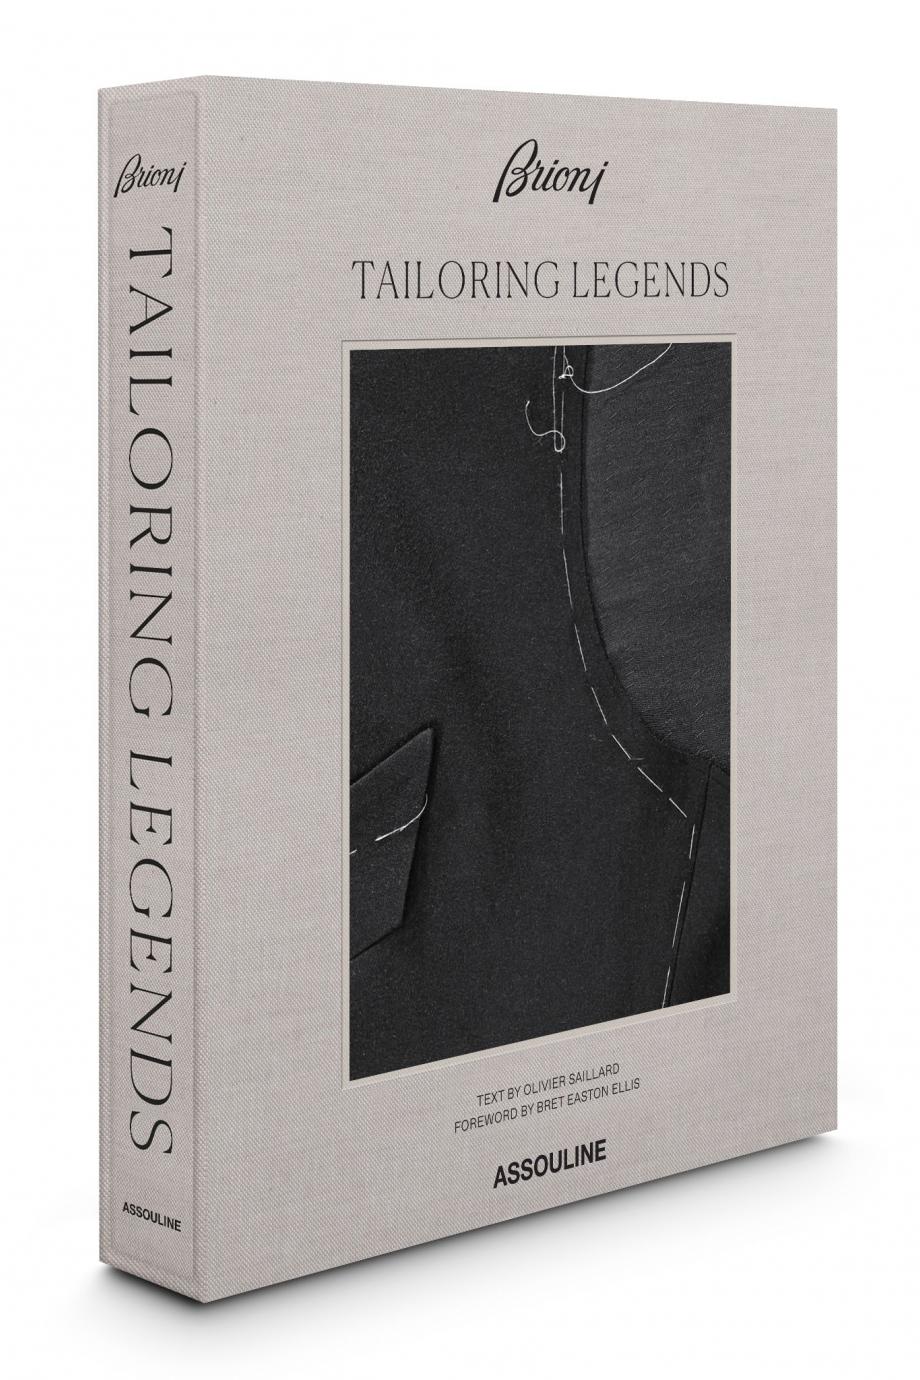 Brioni:Tailloring Legends